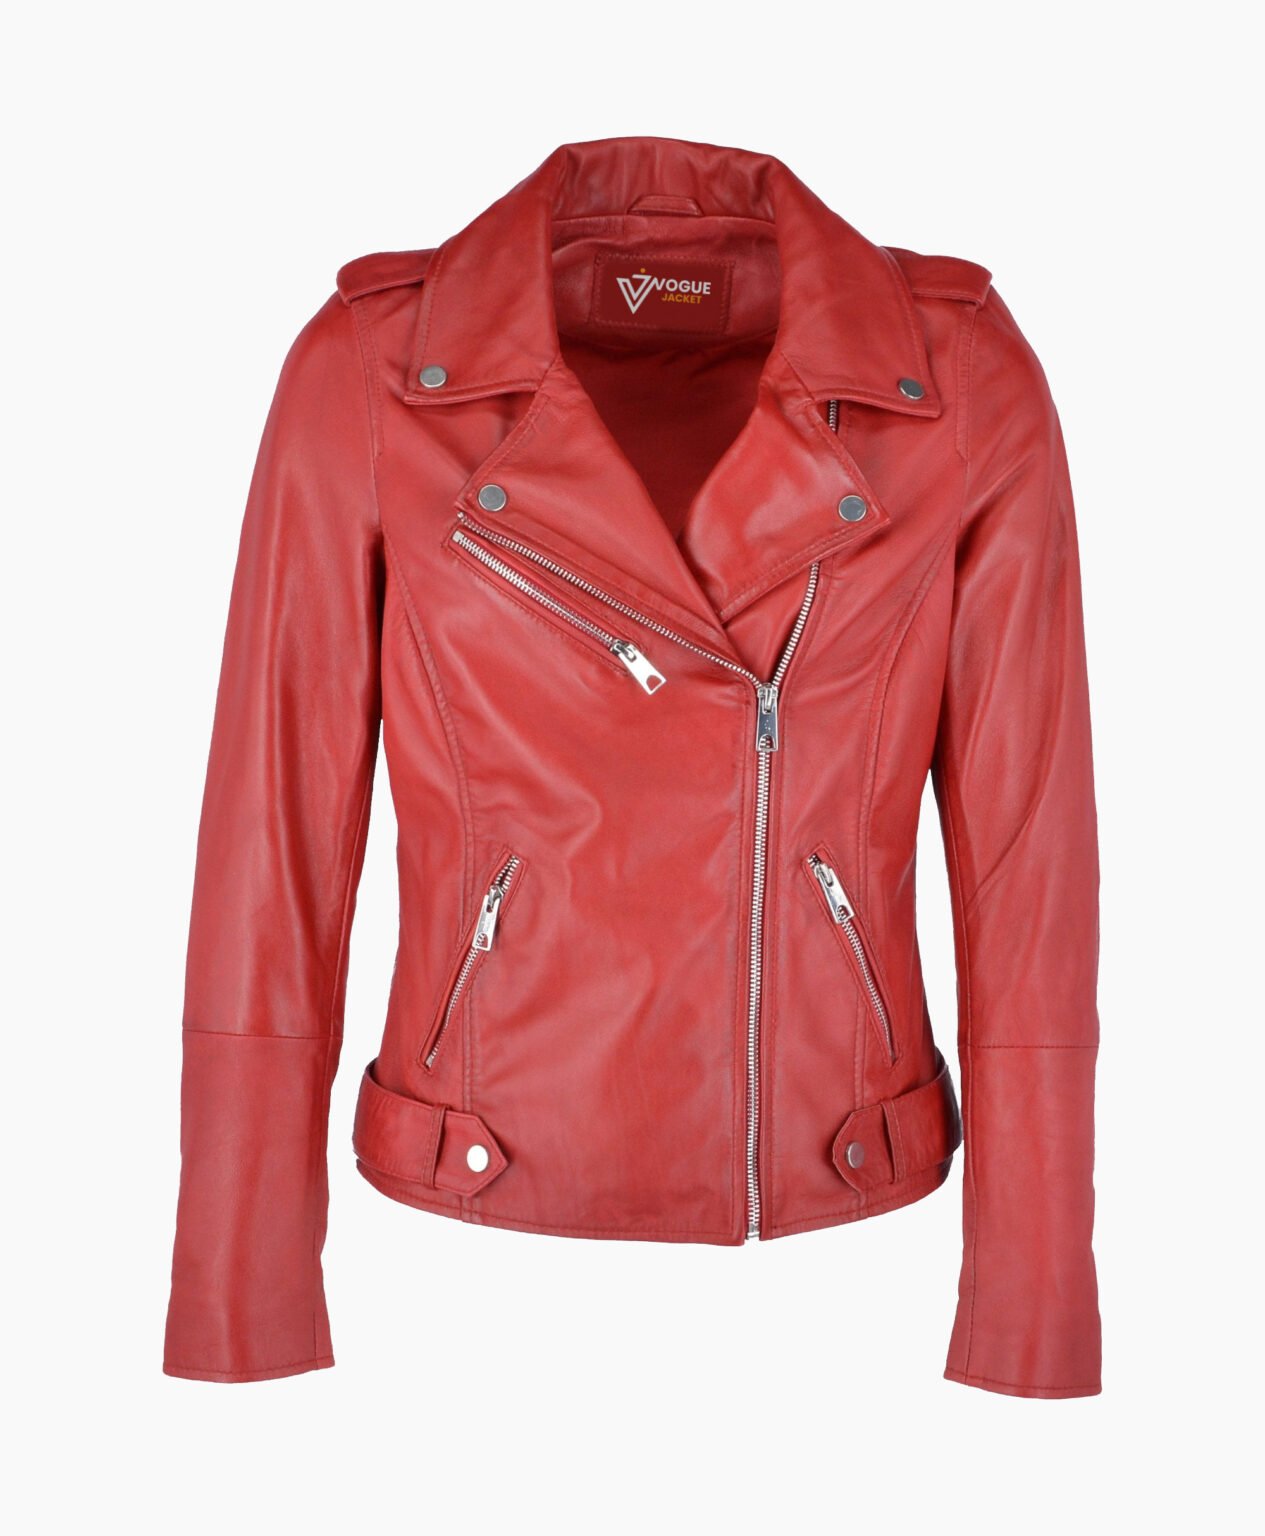 vogue-jacket-leather-biker-jacket-red-ruston-image200